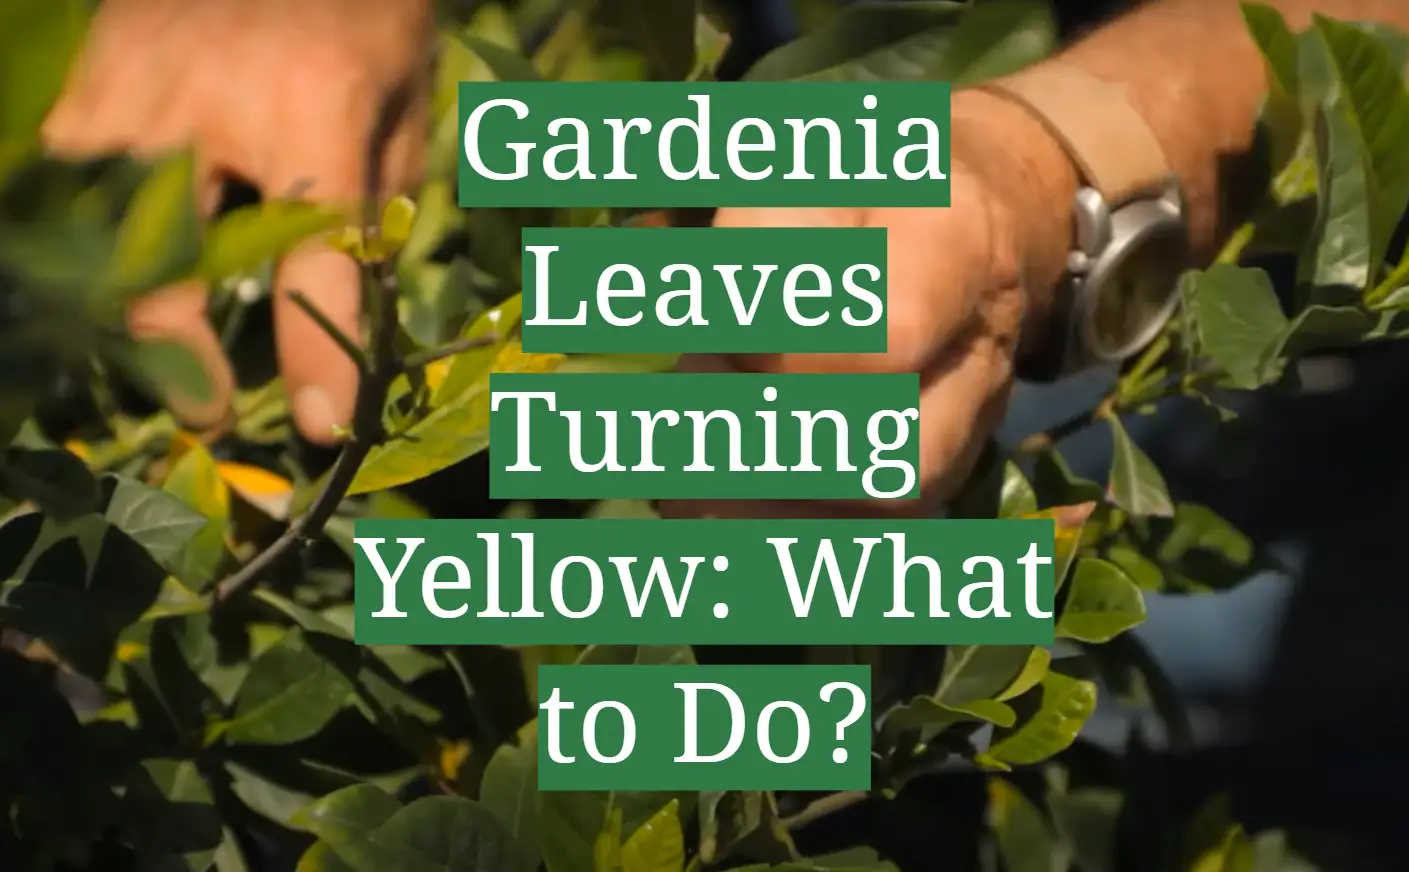 Gardenia Leaves Turning Yellow: What to Do? - GardenProfy